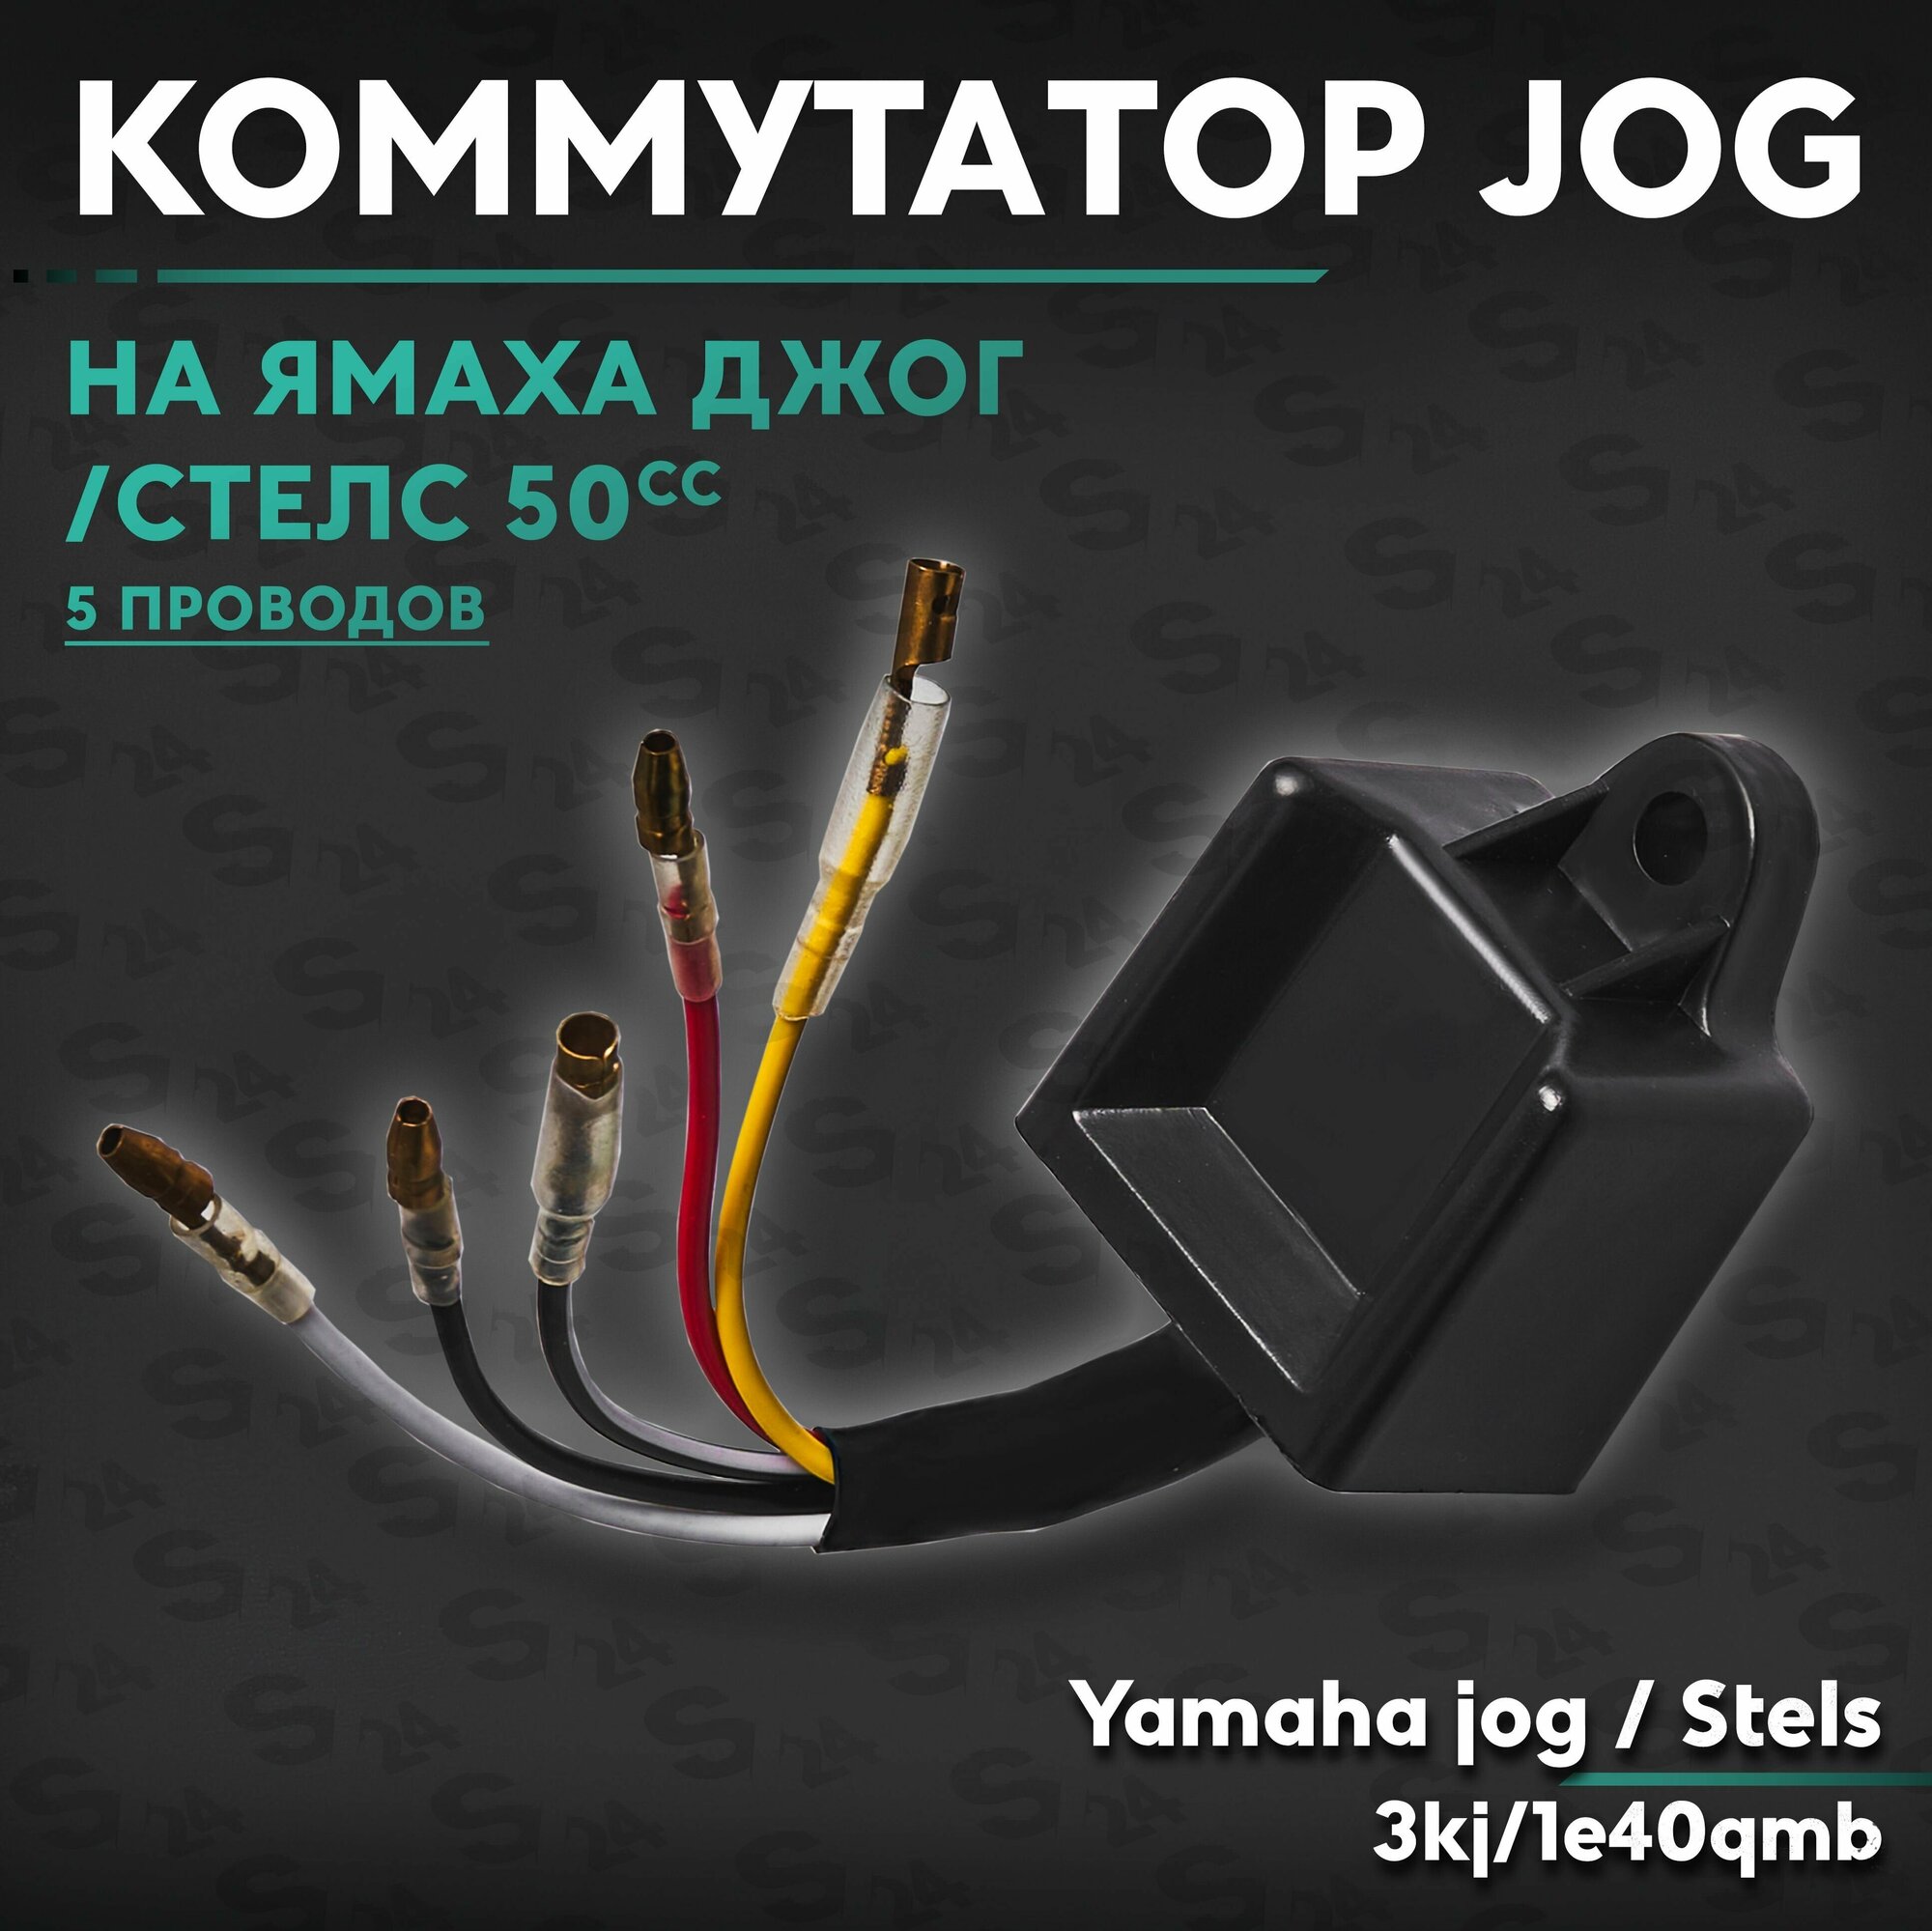 Коммутатор на скутер Ямаха Джог 50 кубов (3kj) и китайский скутер Стелс (1e40qmb)(5 проводов) Yamaha jog / Stels